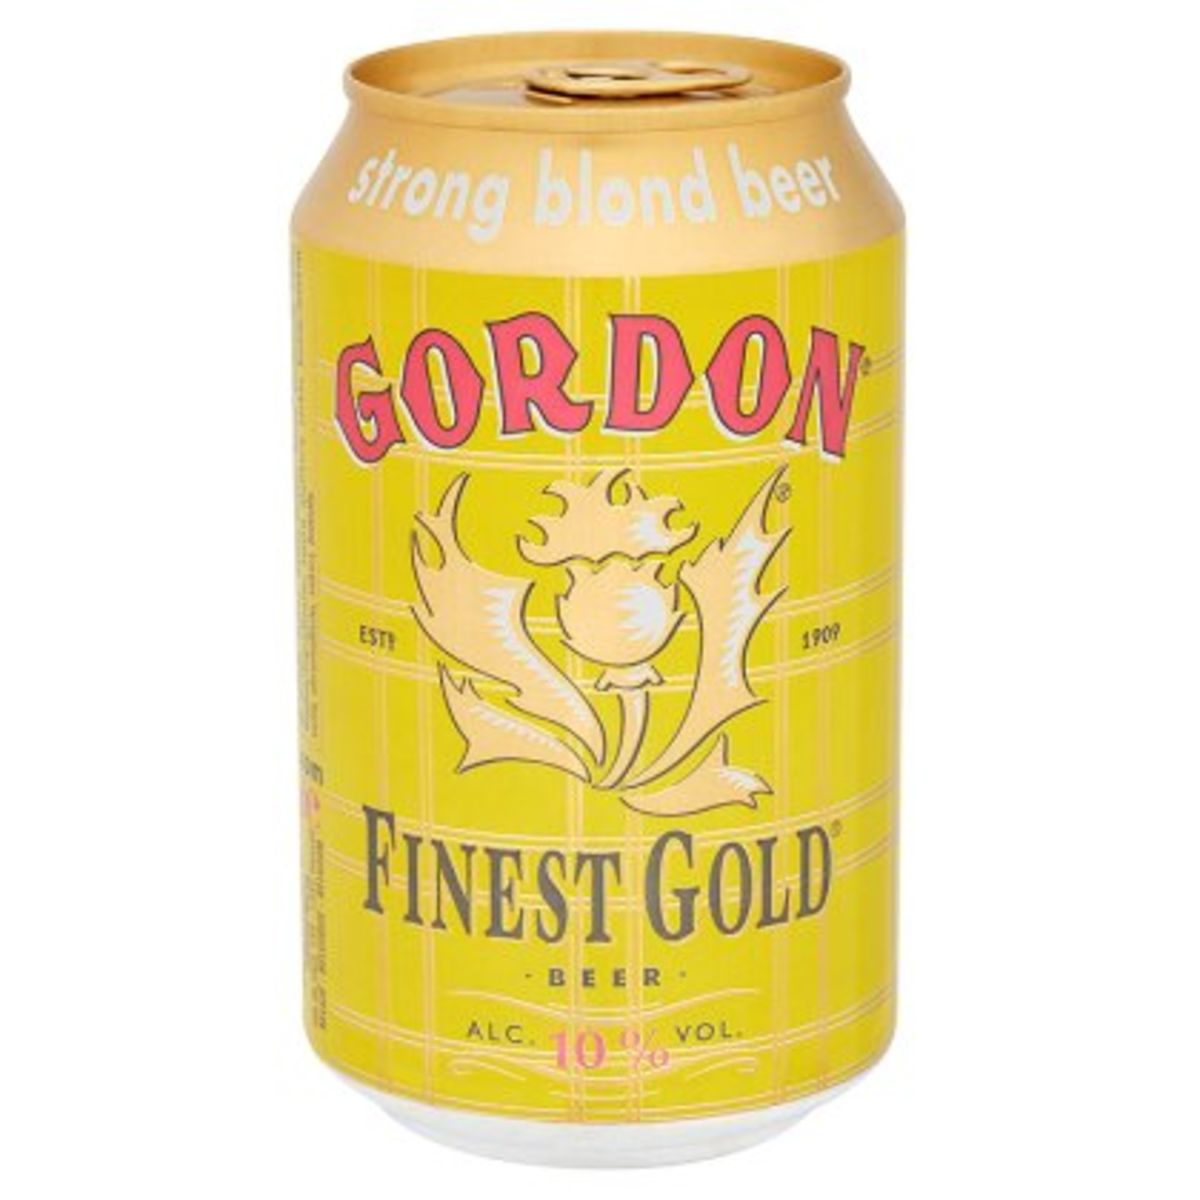 Gordon Finest Gold Strong blond beer 33 cl